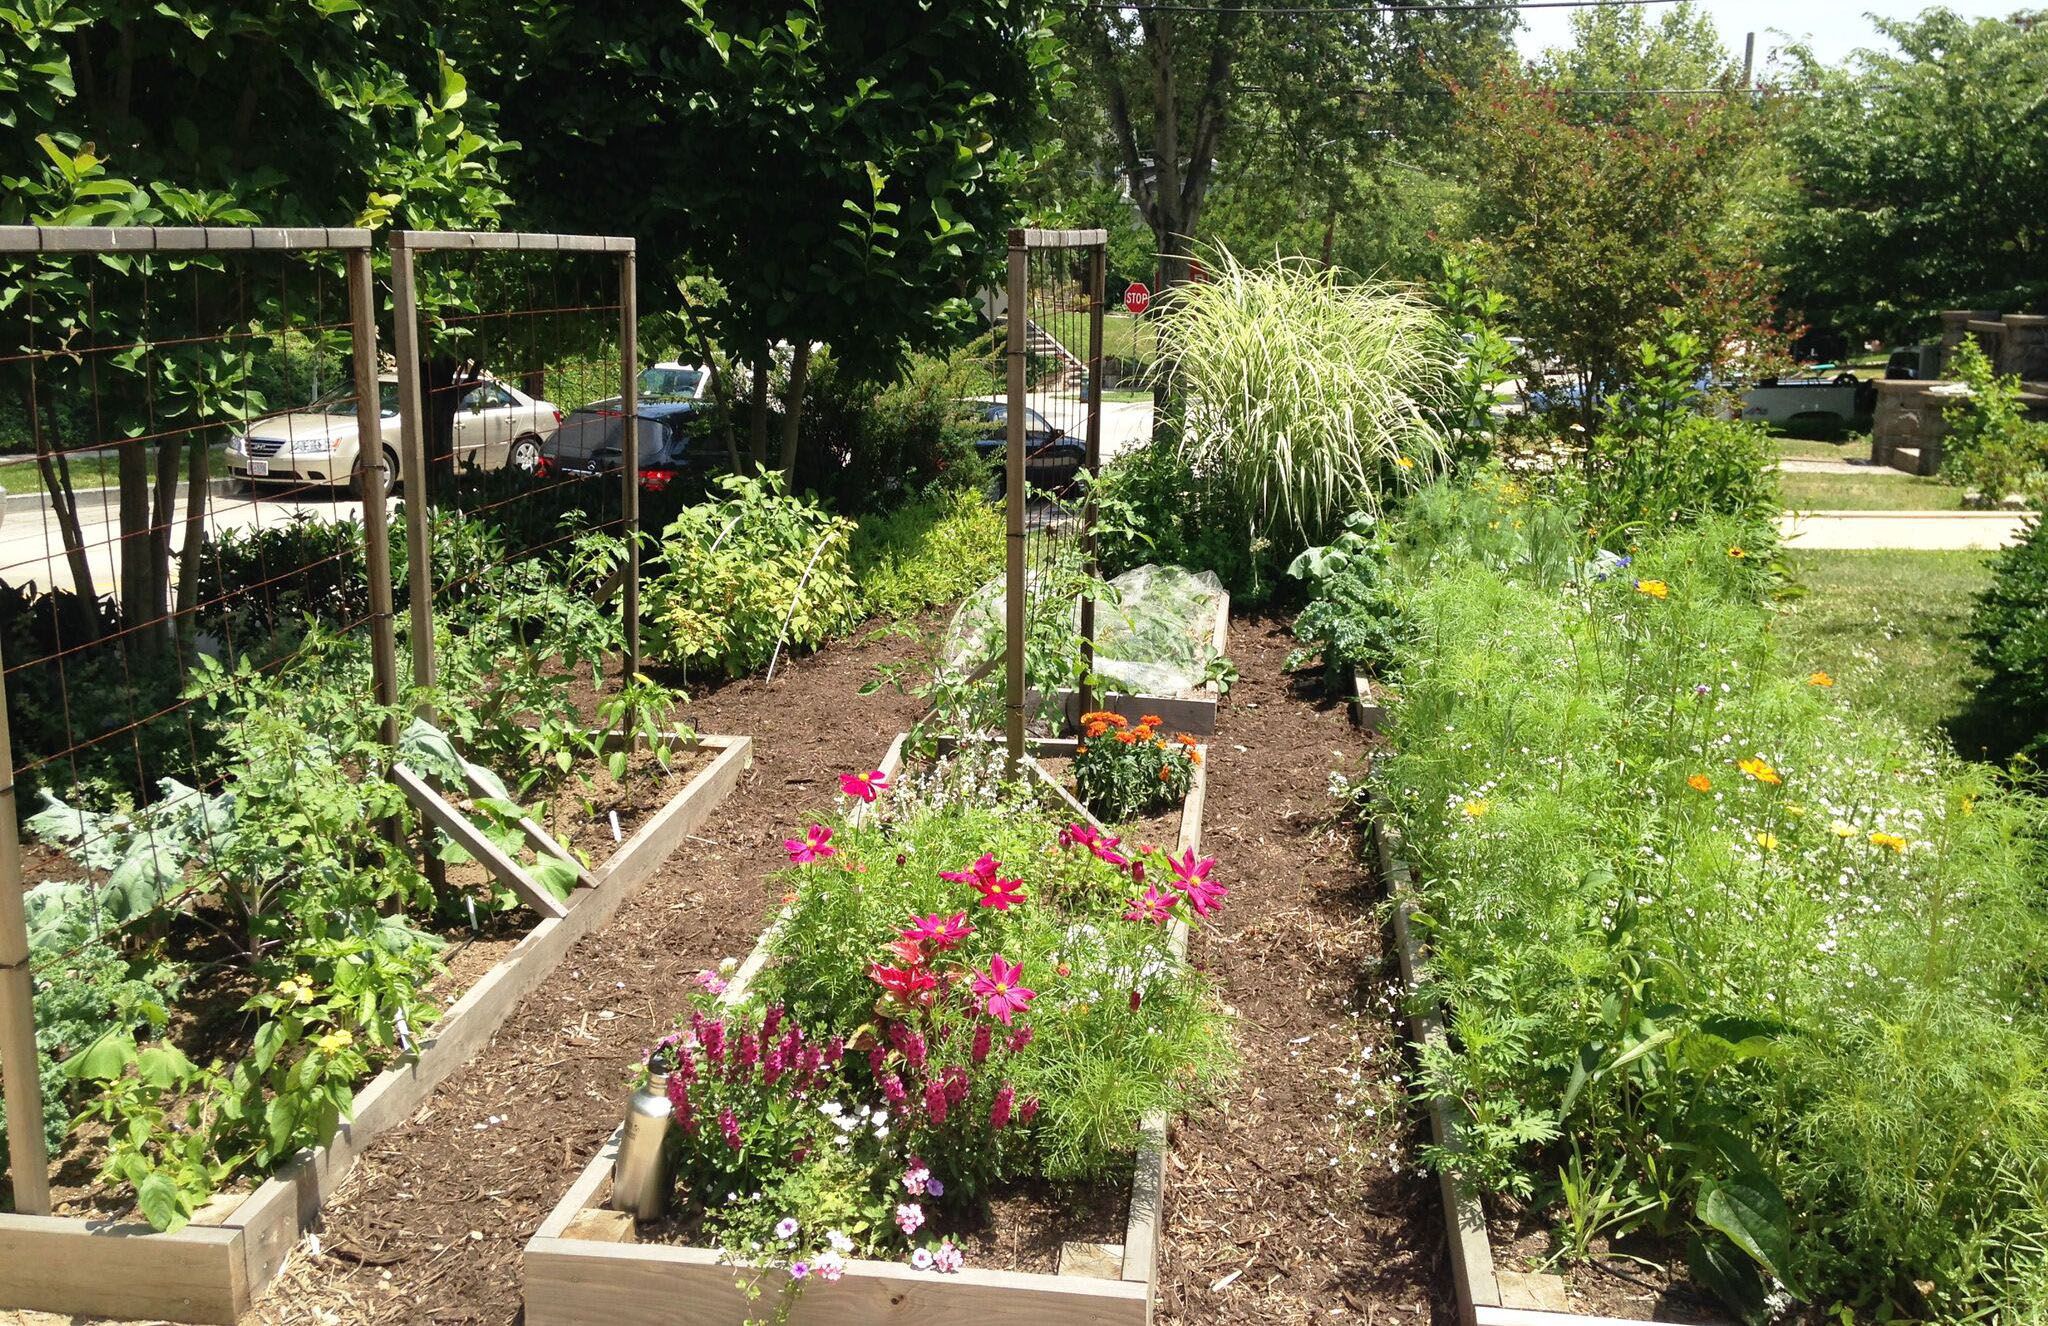 The Best Vegetable Garden Ideas